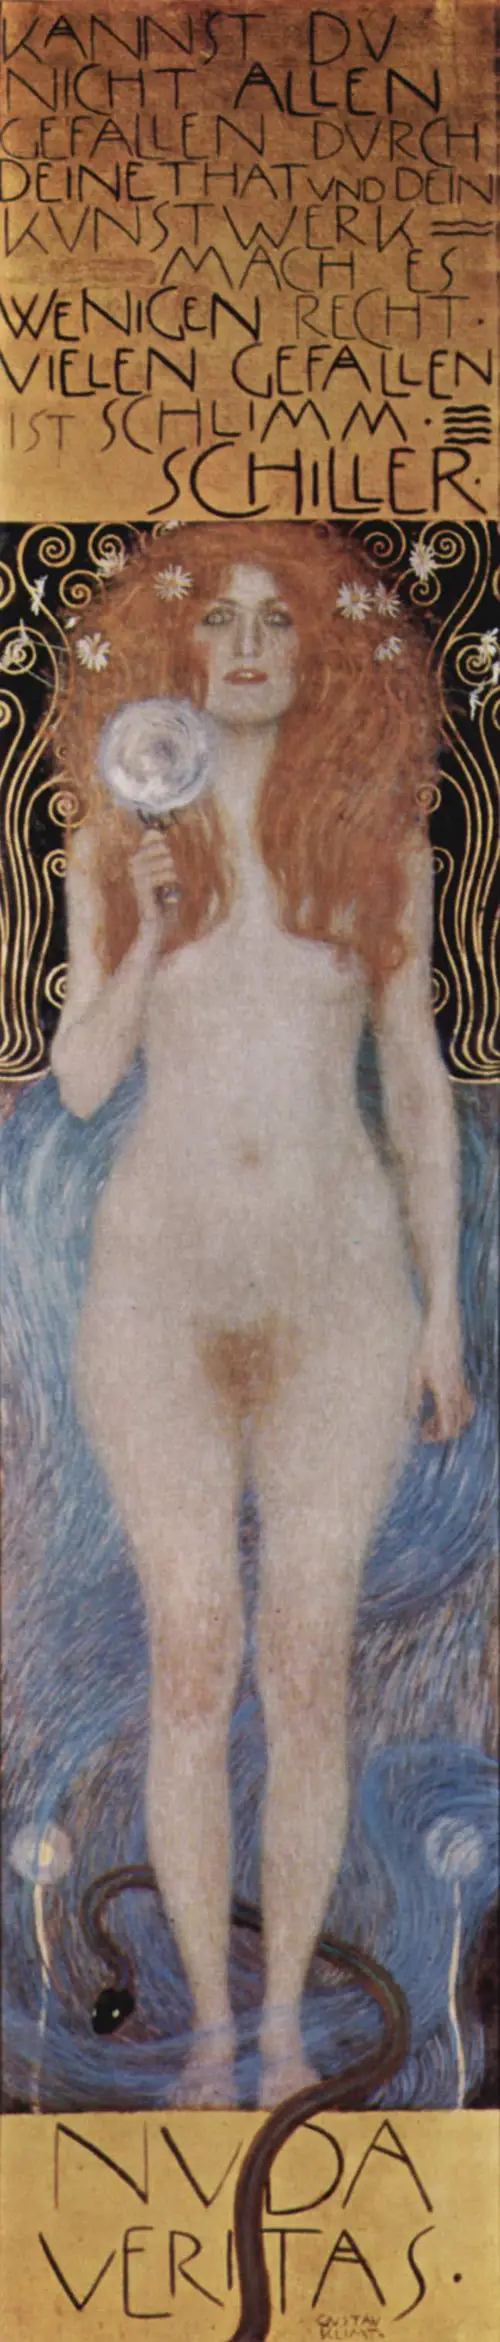 Nuda Veritas Gustav Klimt